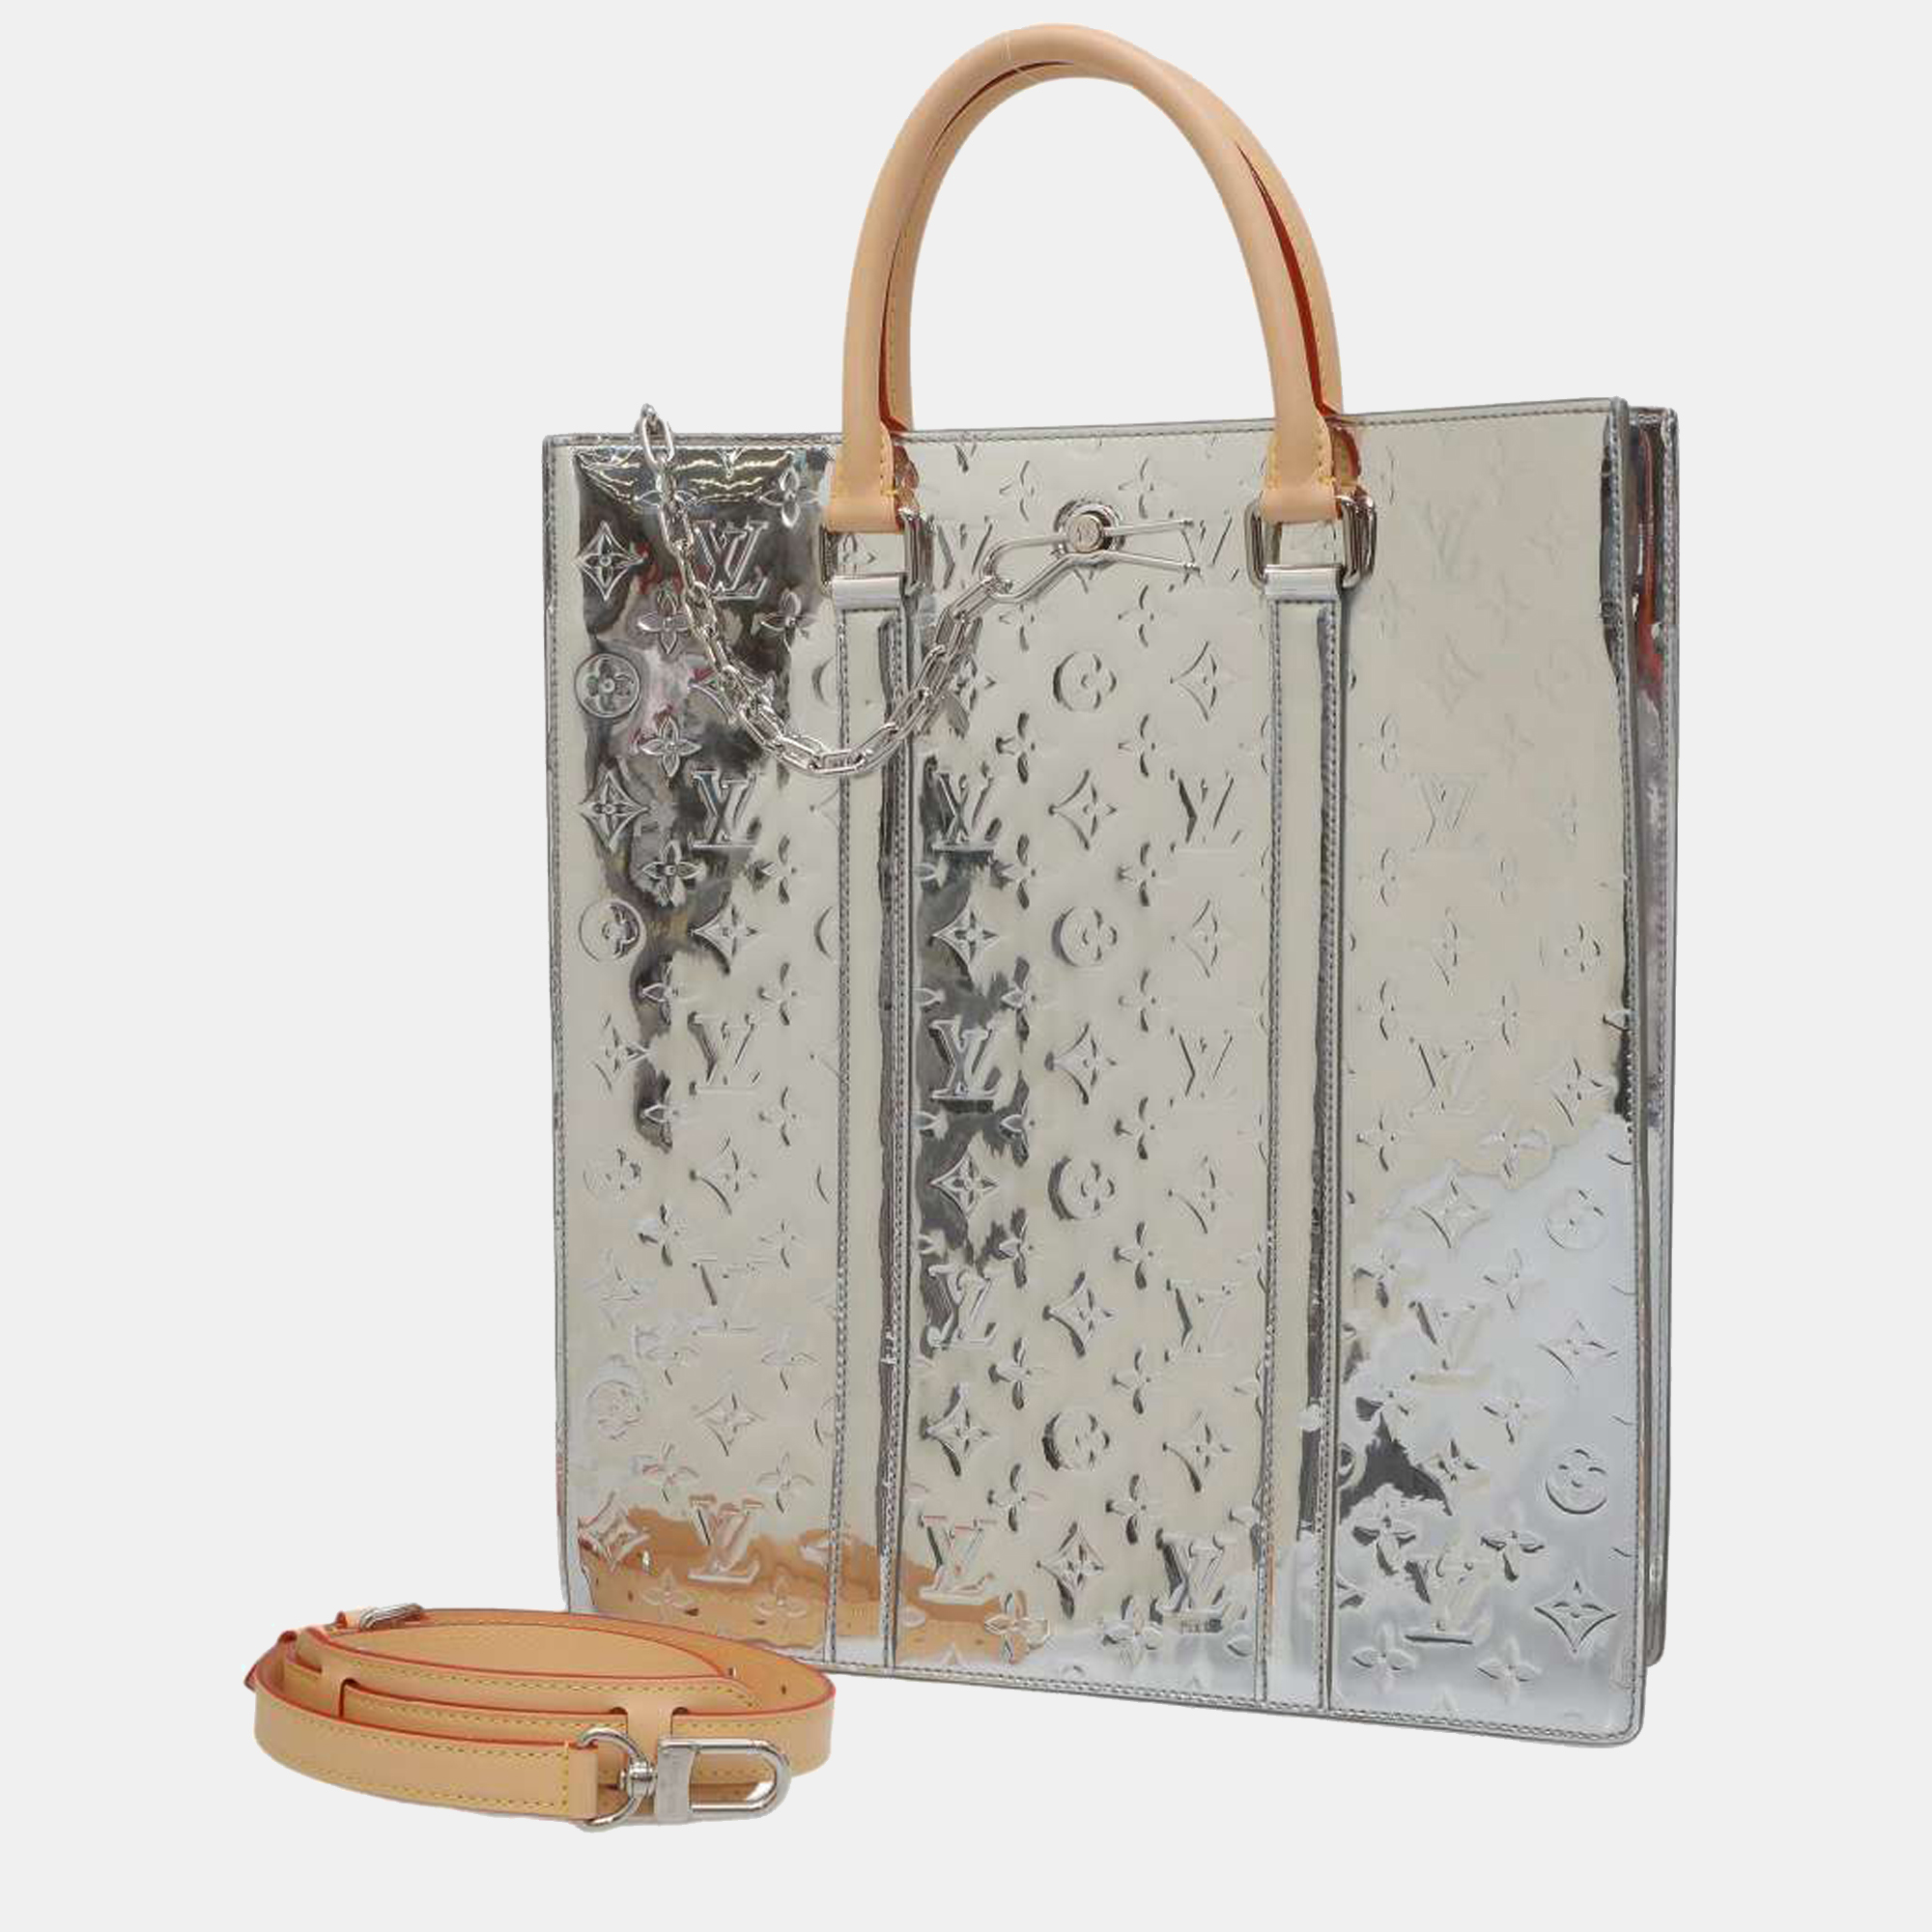 Exclusive Louis Vuitton Monogram Miroir Sac Plat bags now on sale